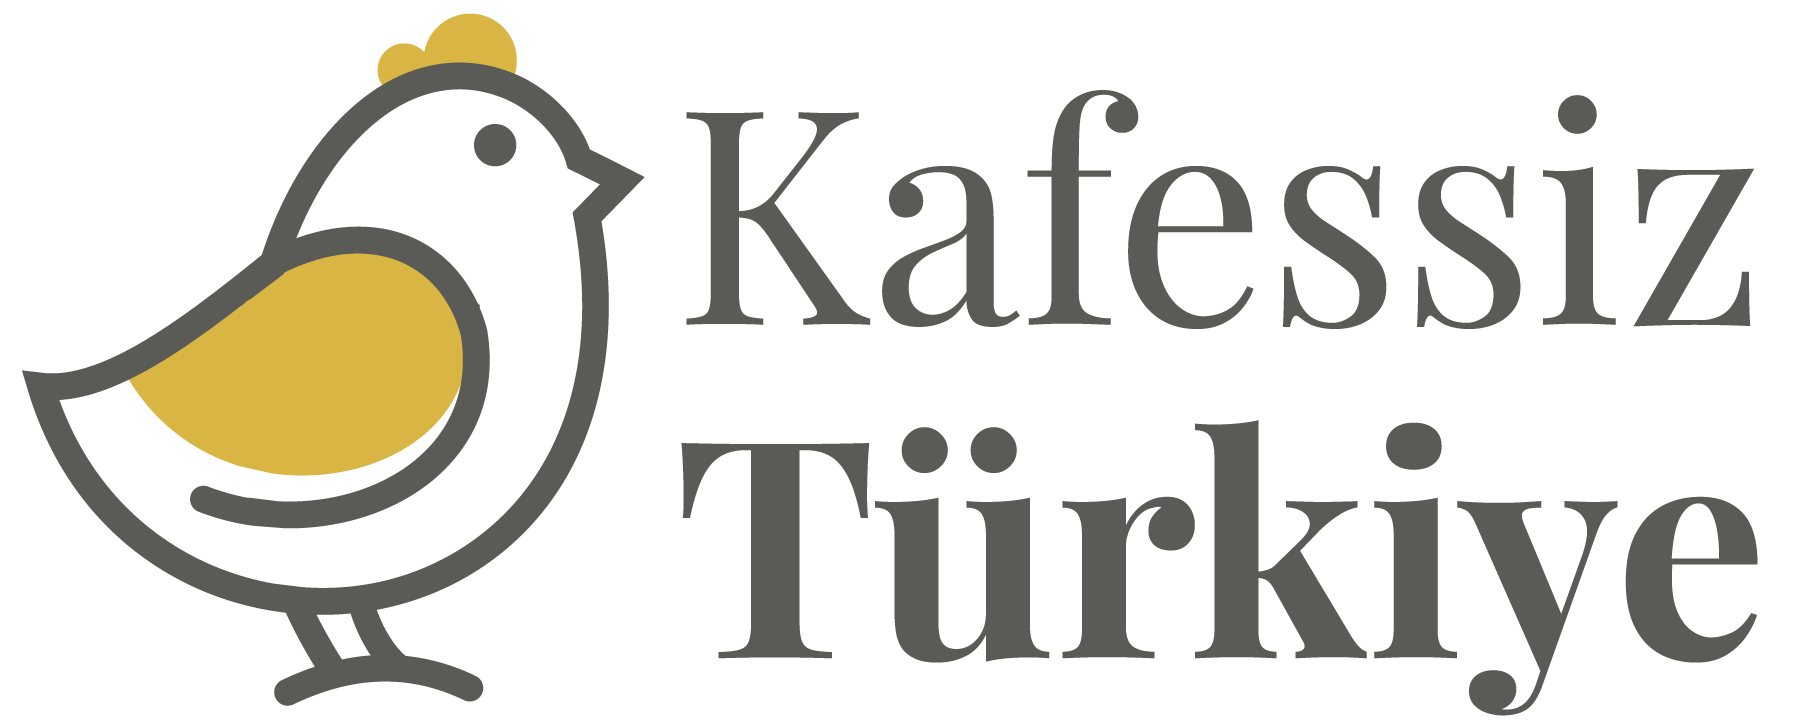 kt_logo